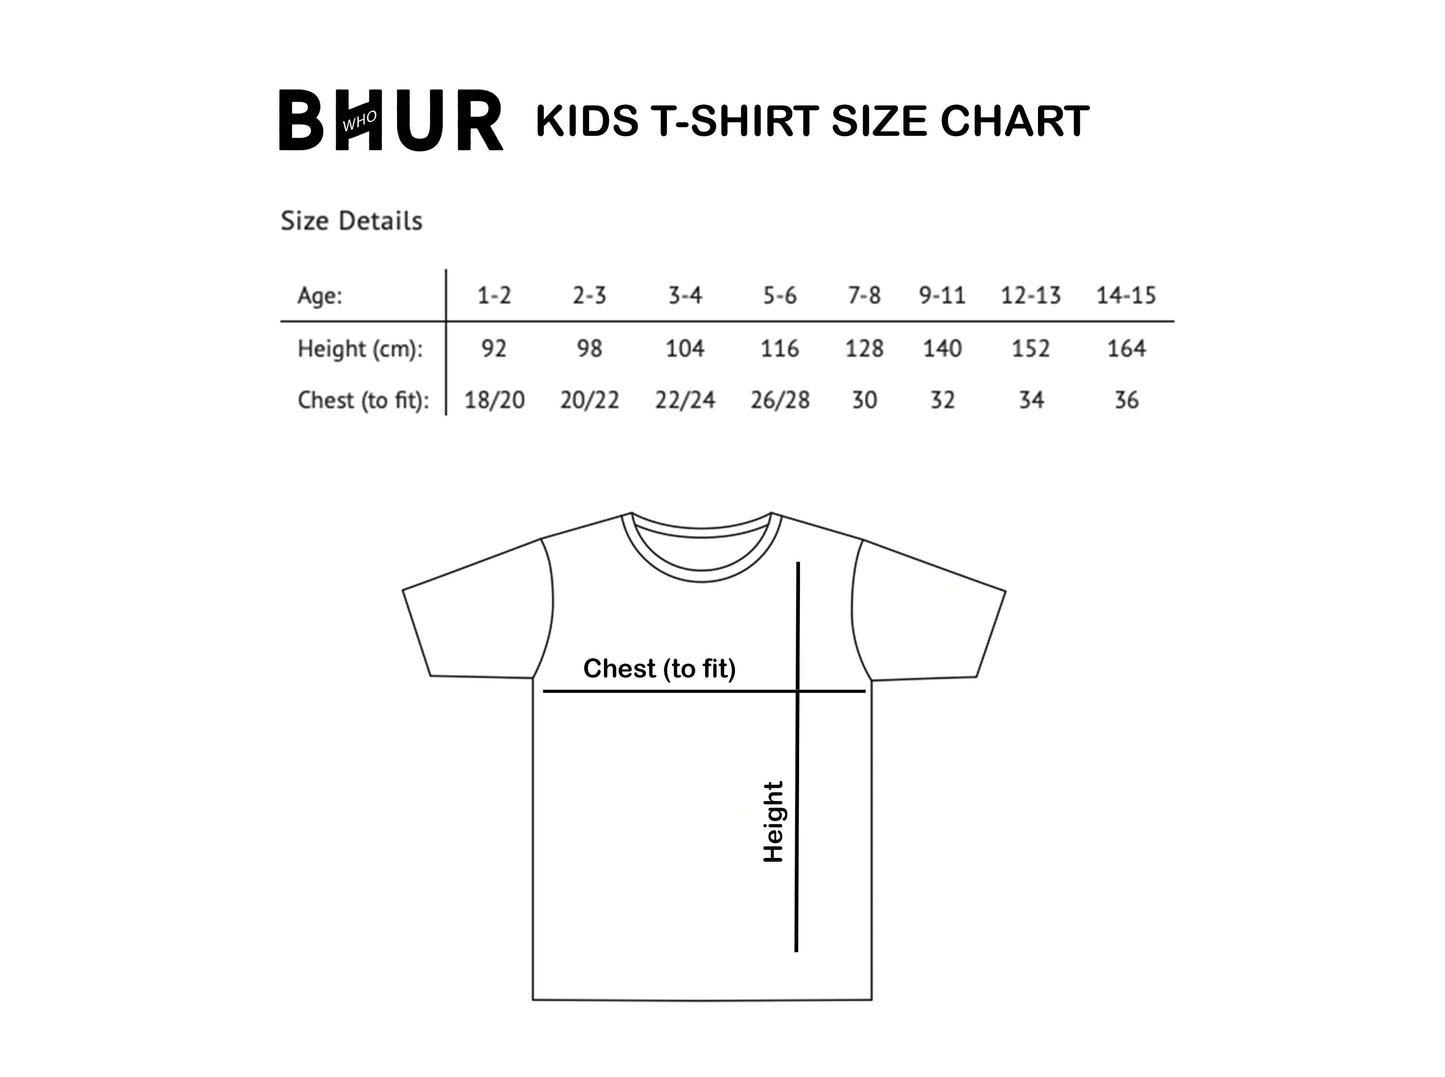 Big Sister To Be Boho Kids T-Shirt